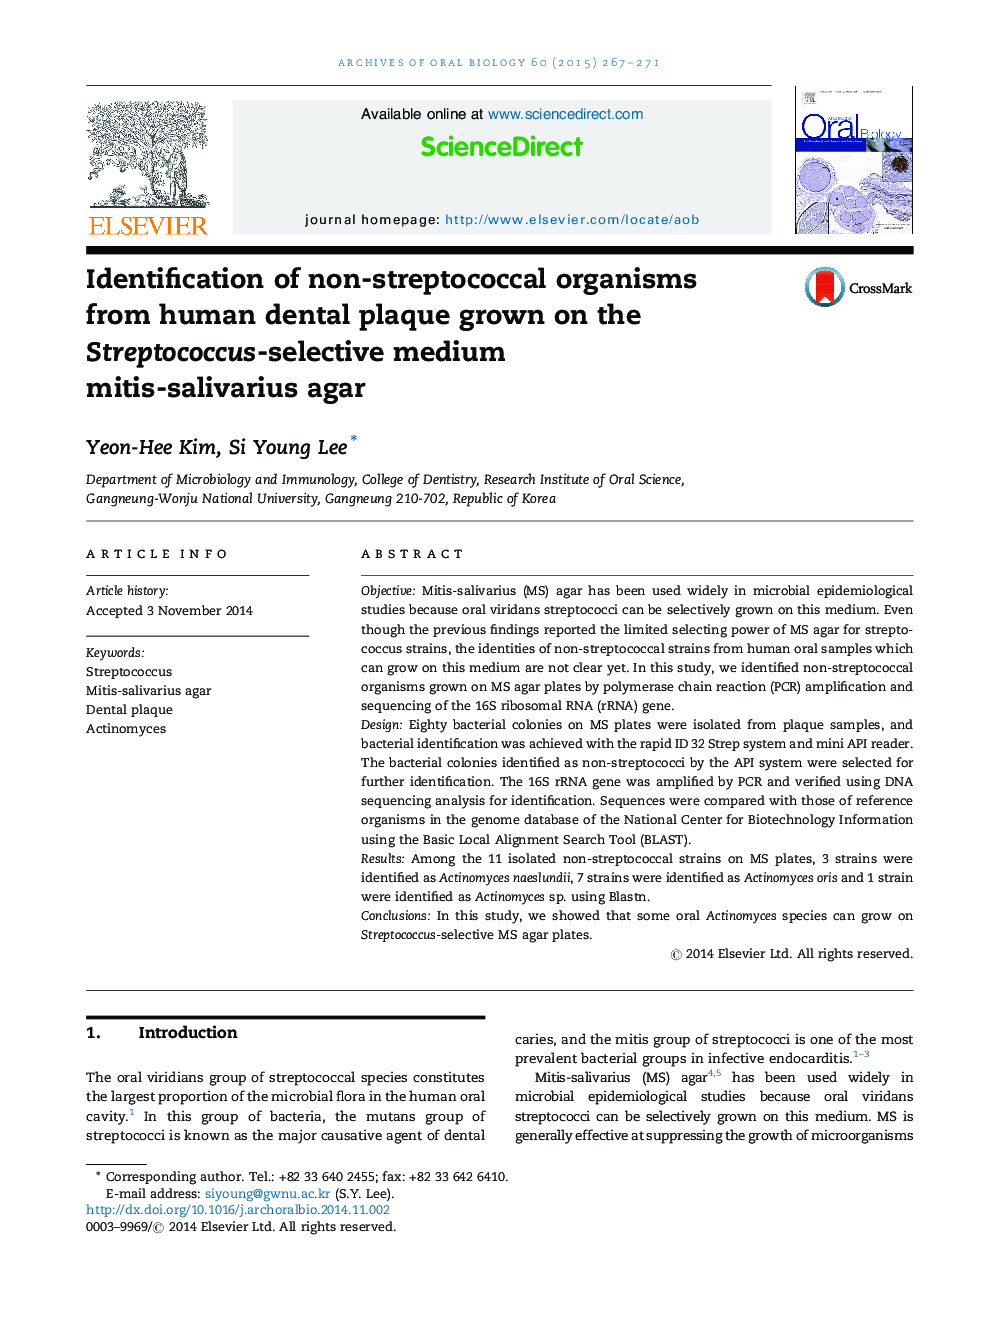 Identification of non-streptococcal organisms from human dental plaque grown on the Streptococcus-selective medium mitis-salivarius agar